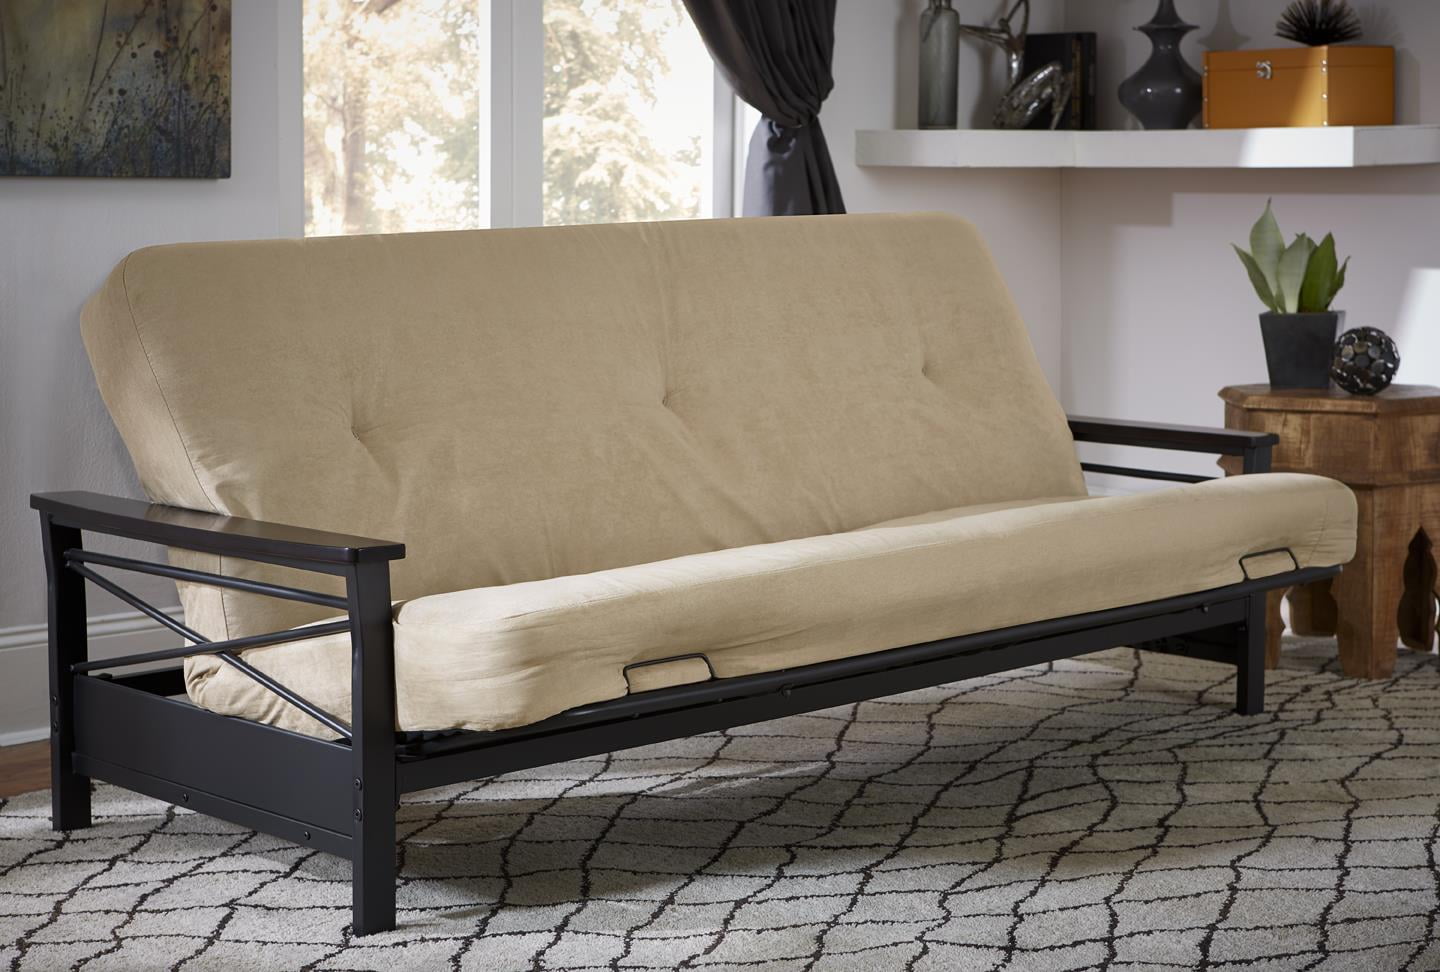 futon mattress kit for sale